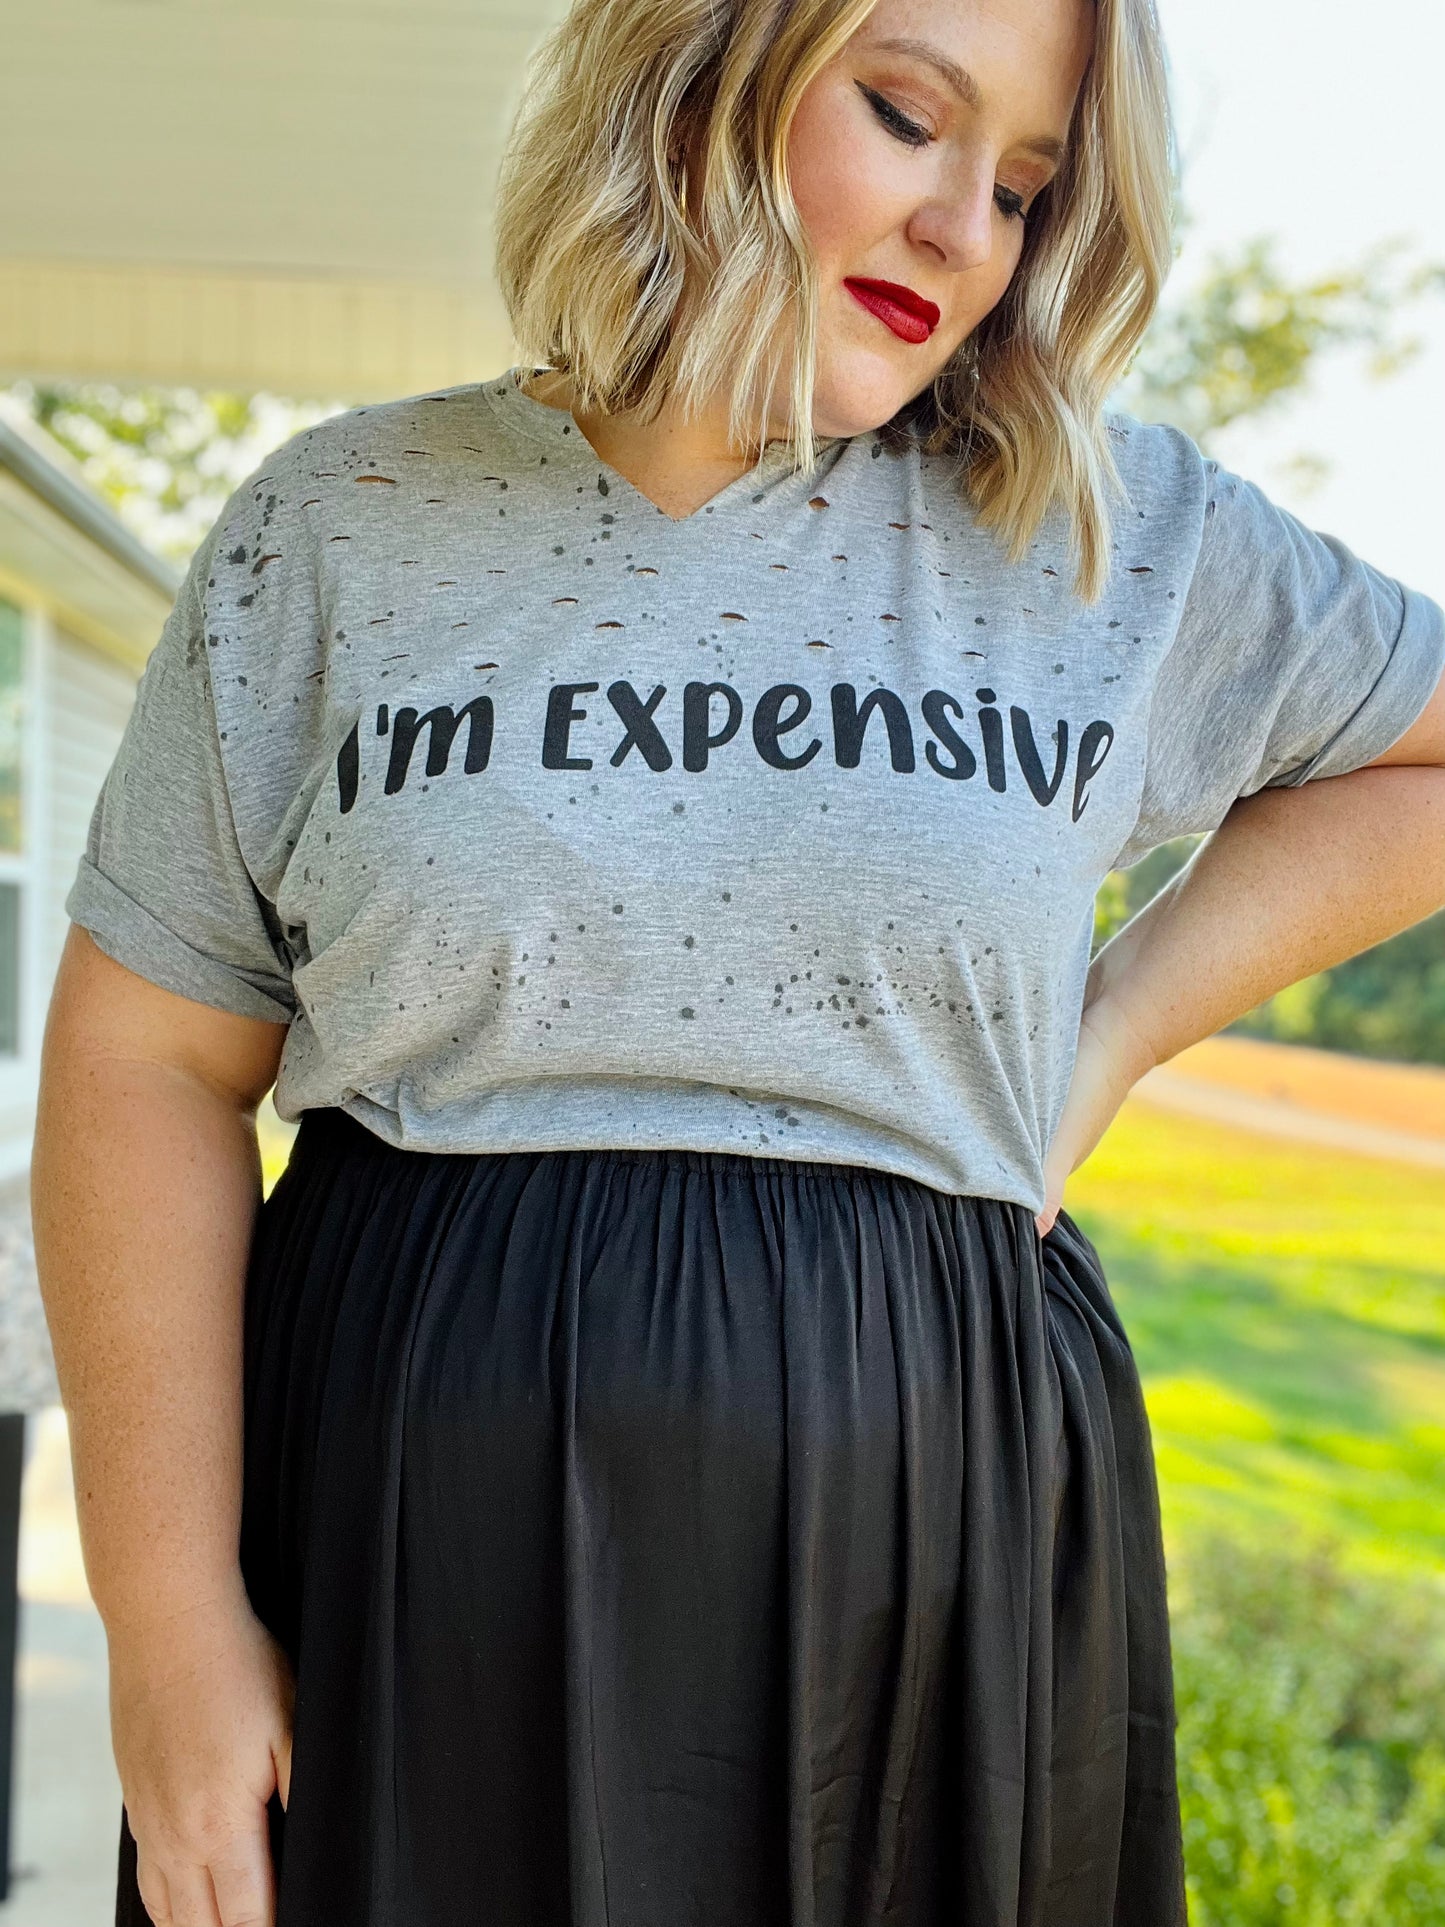 "I'm Expensive" Distressed Tee